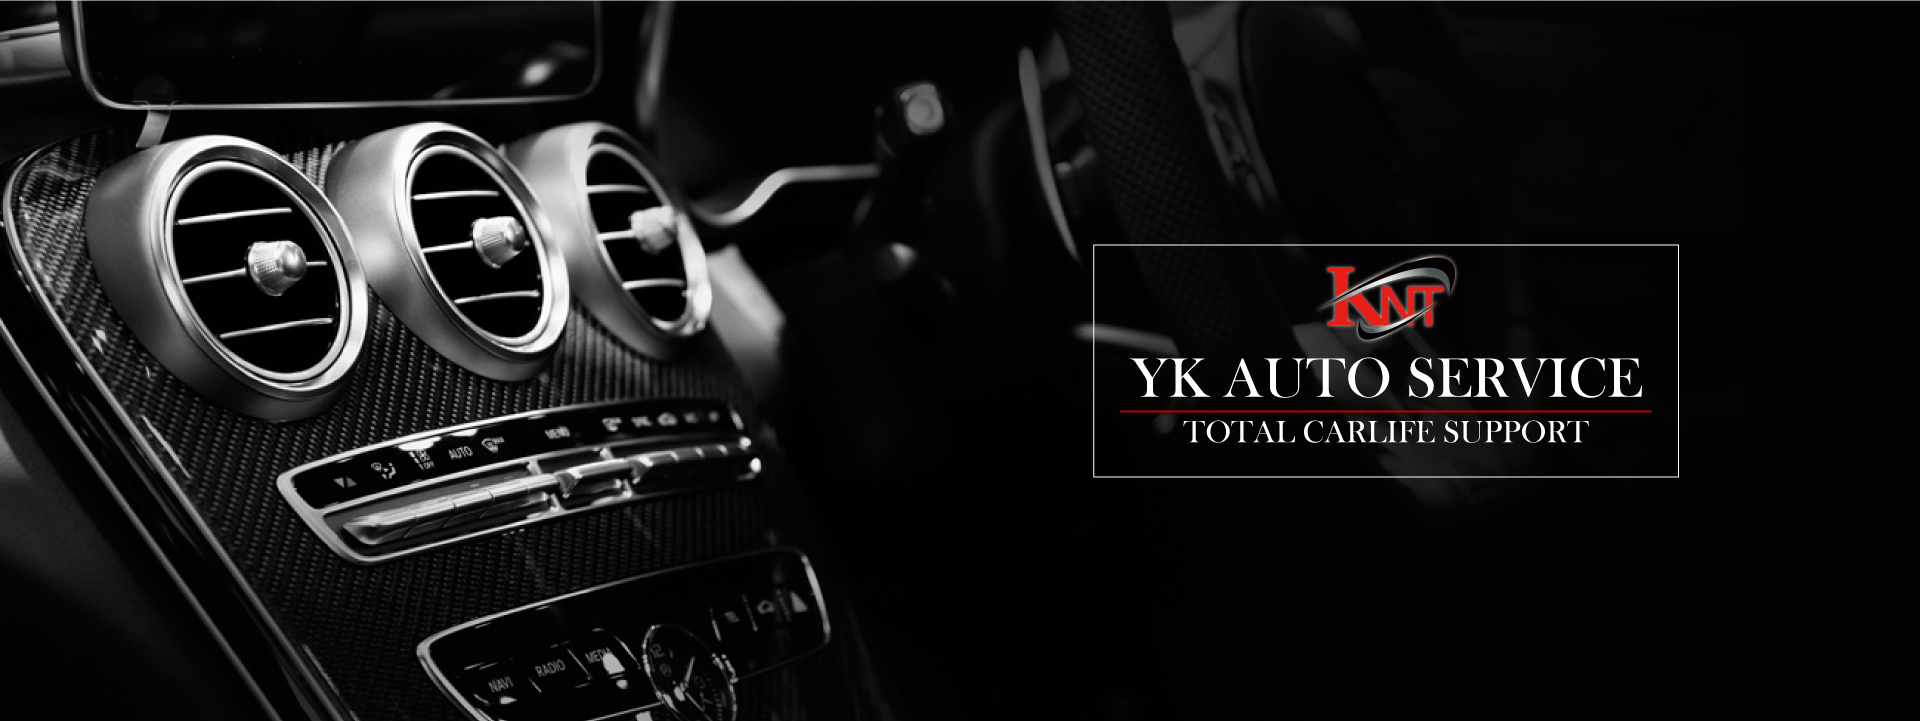 YK AUTO SERVICE 栃木県佐野市の自動車販売・整備会社